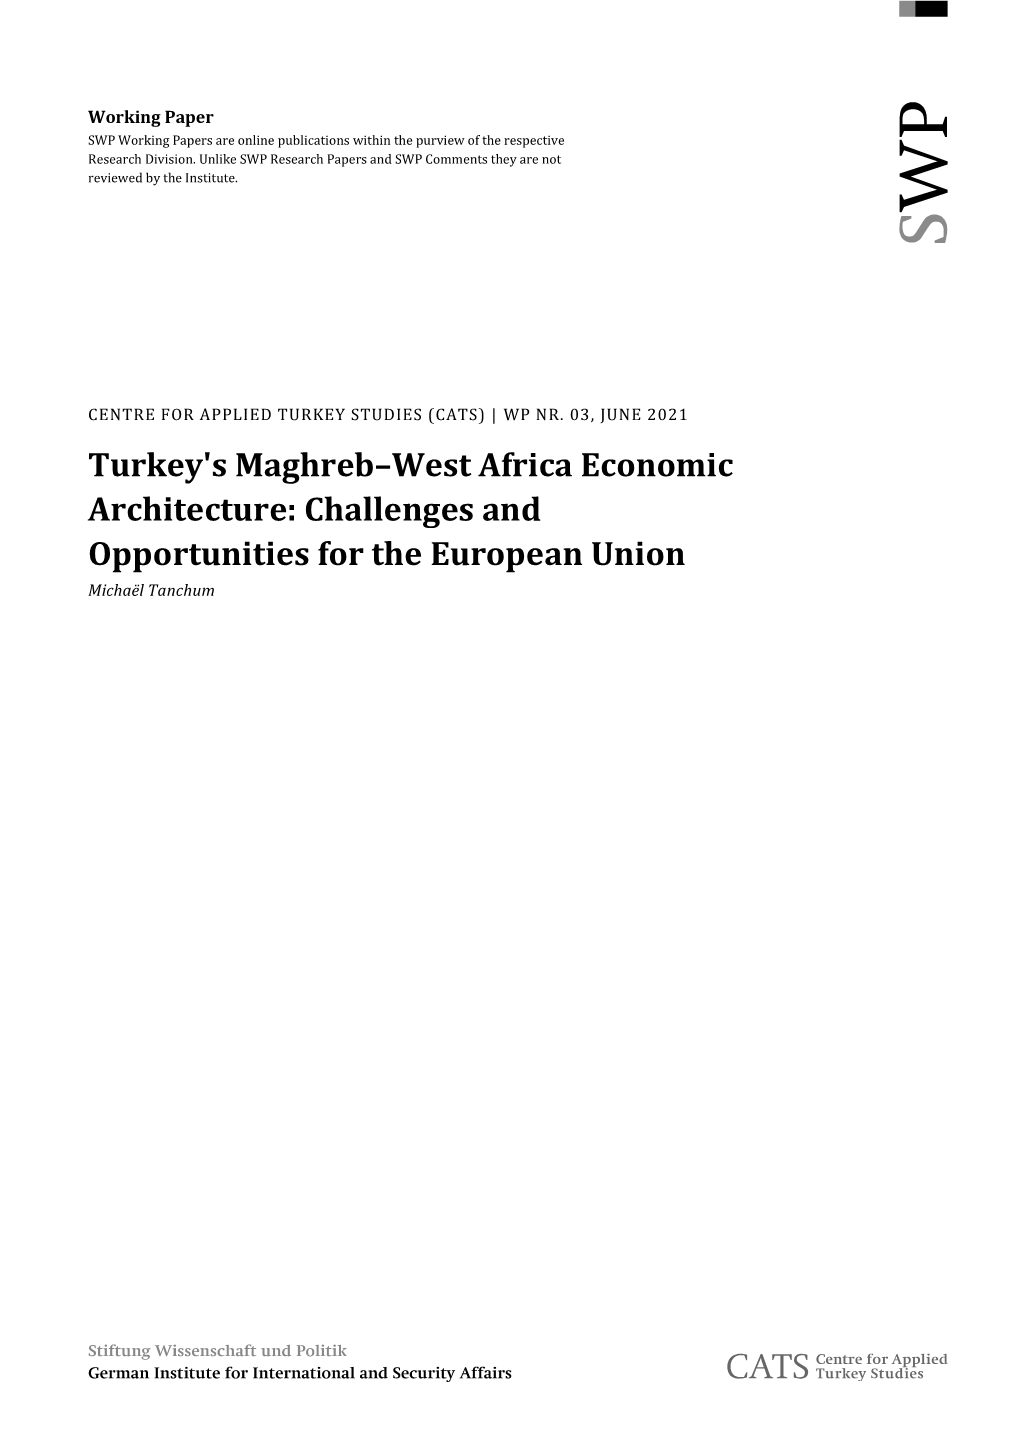 Turkey's Maghreb-West Africa Economic Architecture